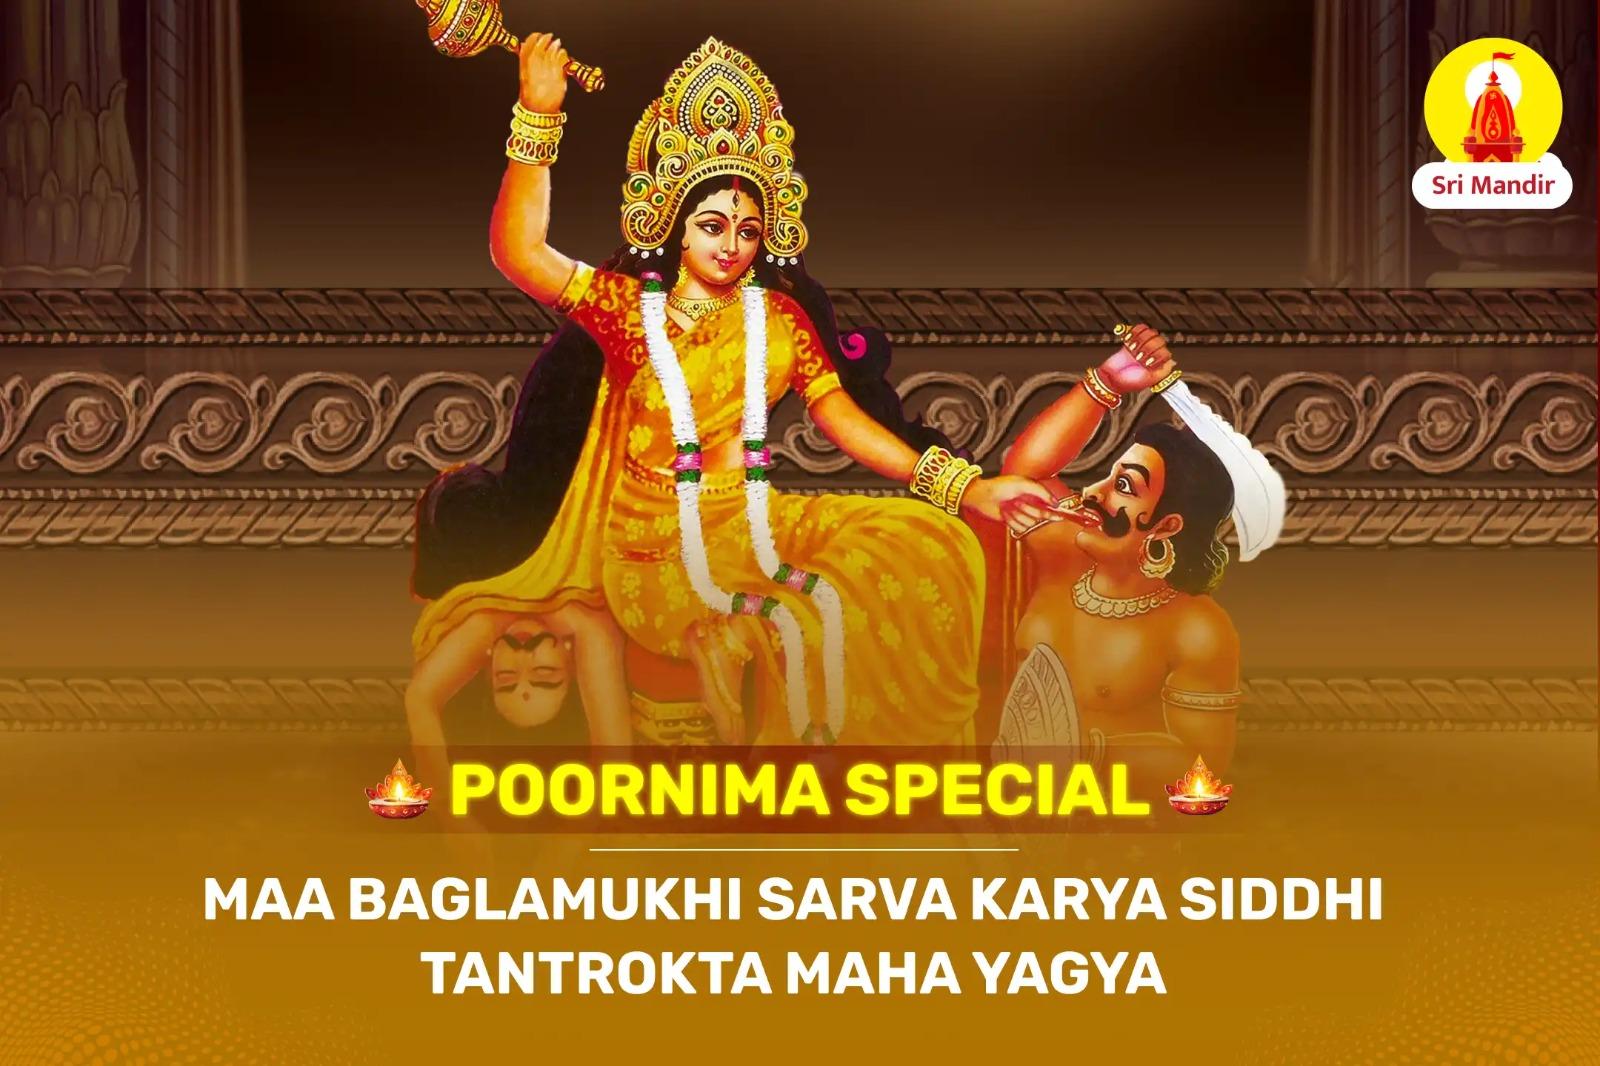 Poornima Special Maa Baglamukhi Sarva Karya Siddhi Tantrokta Maha Yagya